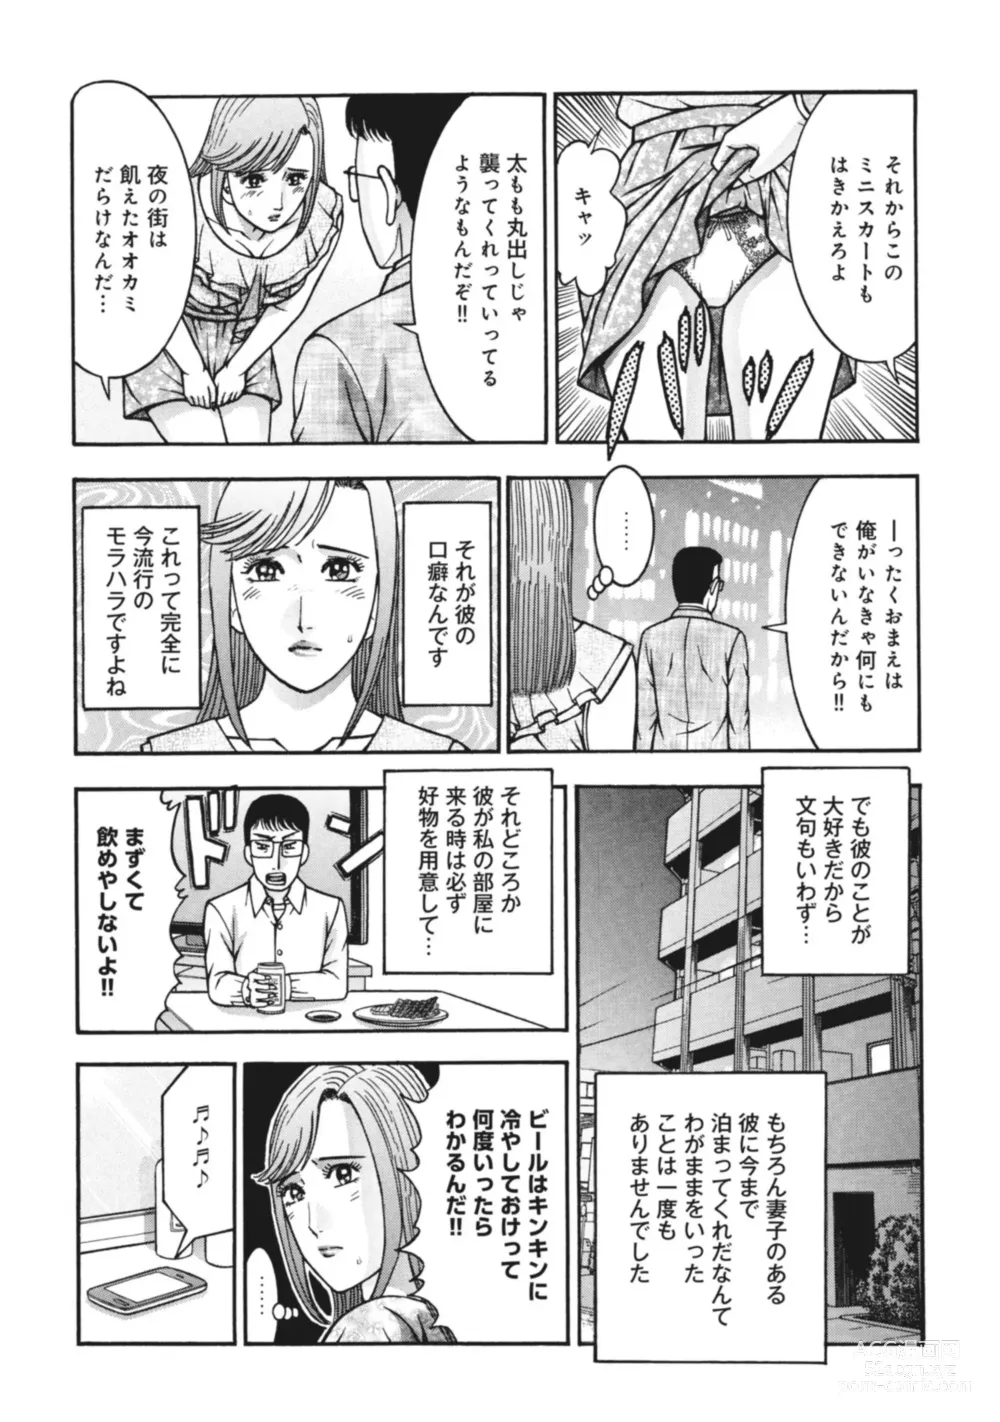 Page 11 of manga Renai Kaunserā Maki no Teisō Fairu 1